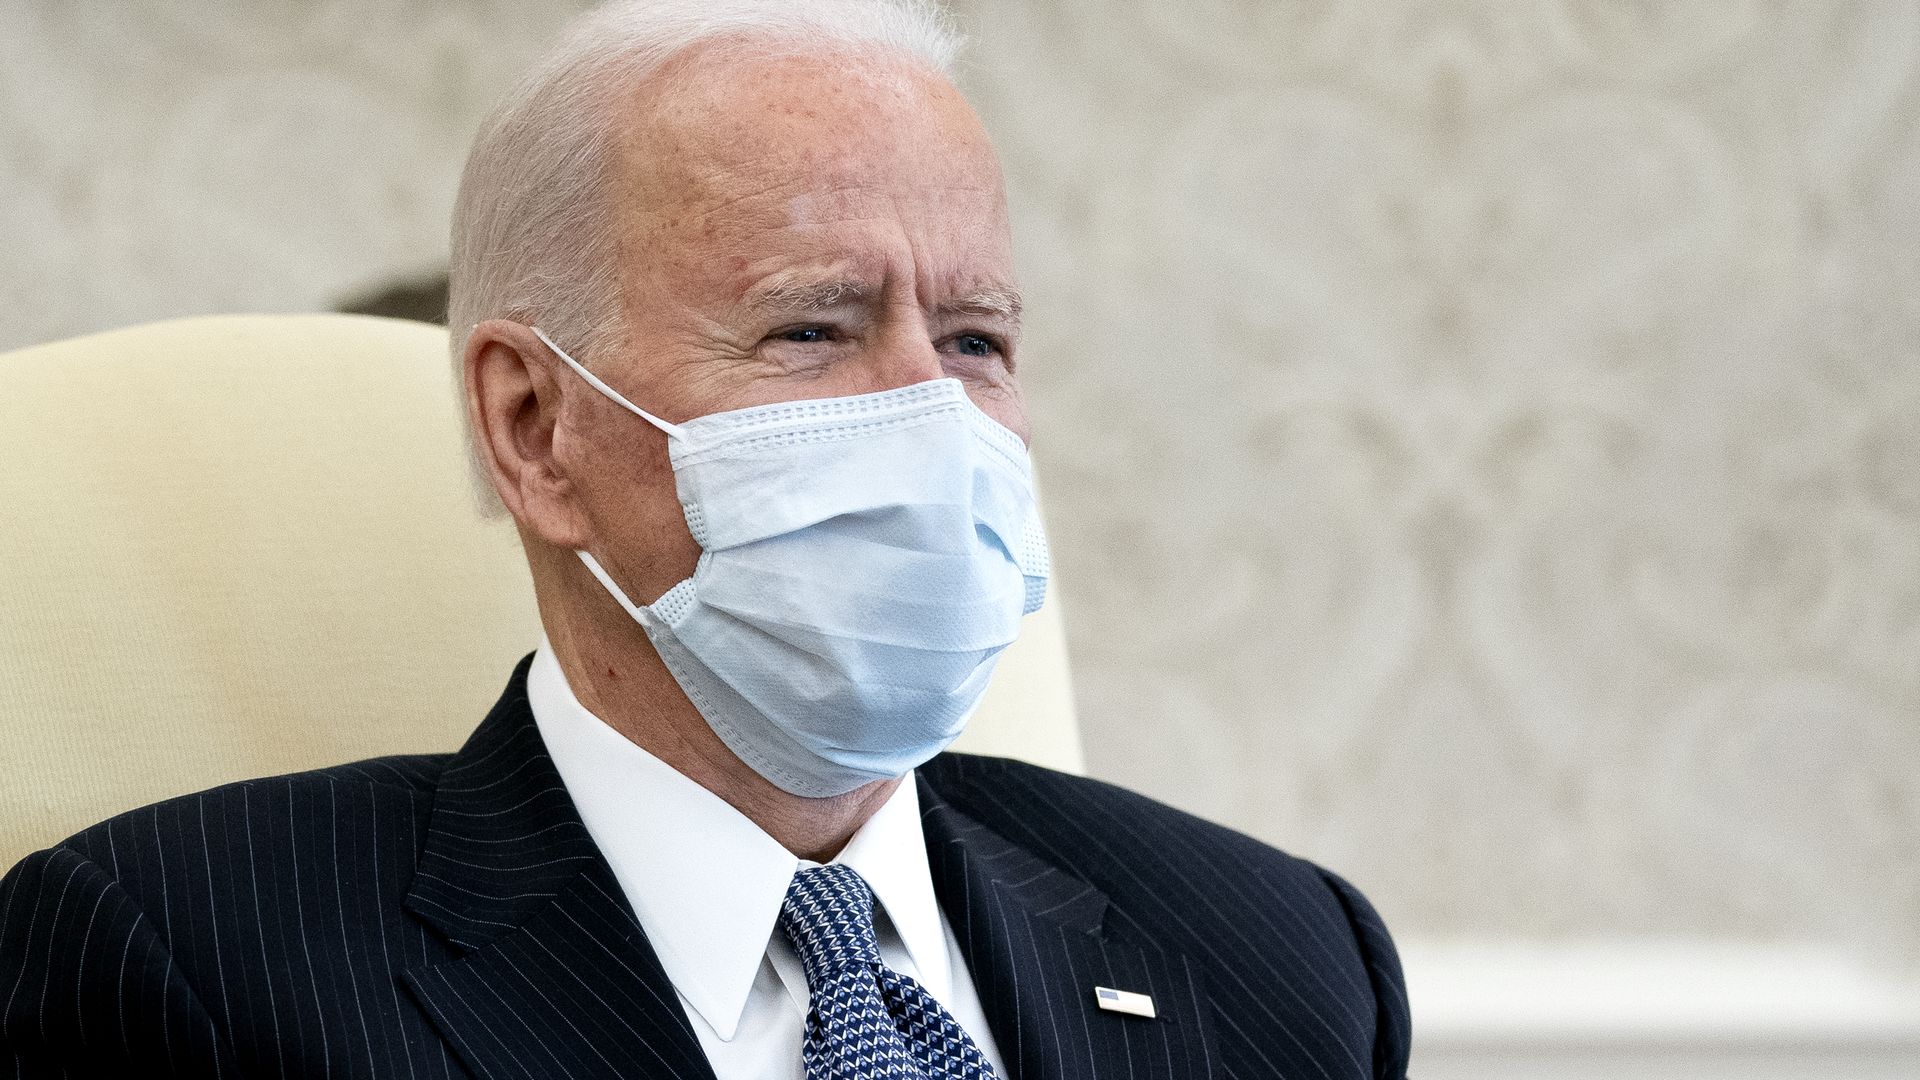 Biden wears a face mask 